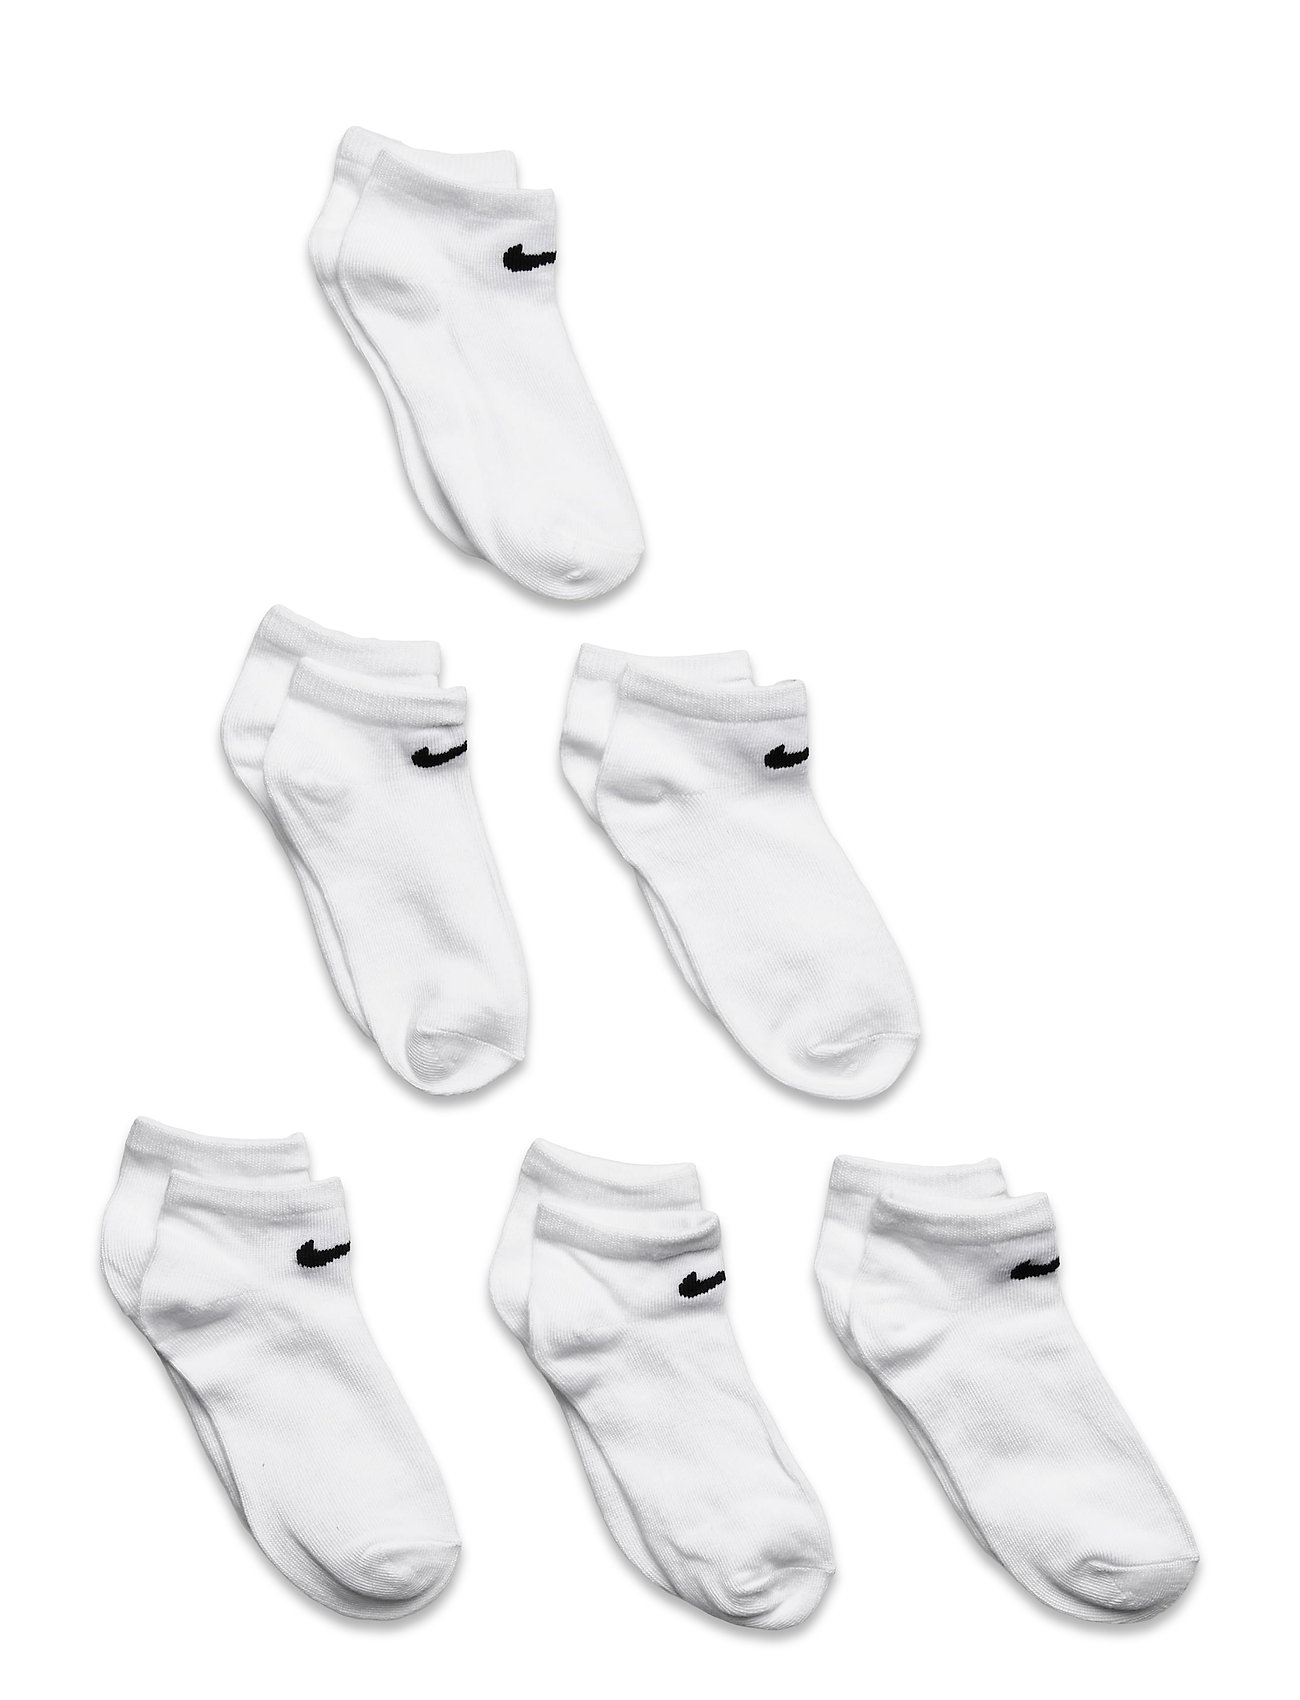 Nhn Nike Colorful Pack Low / Nhn Nike Colorful Pack Low Sport Socks & Tights Socks White Nike